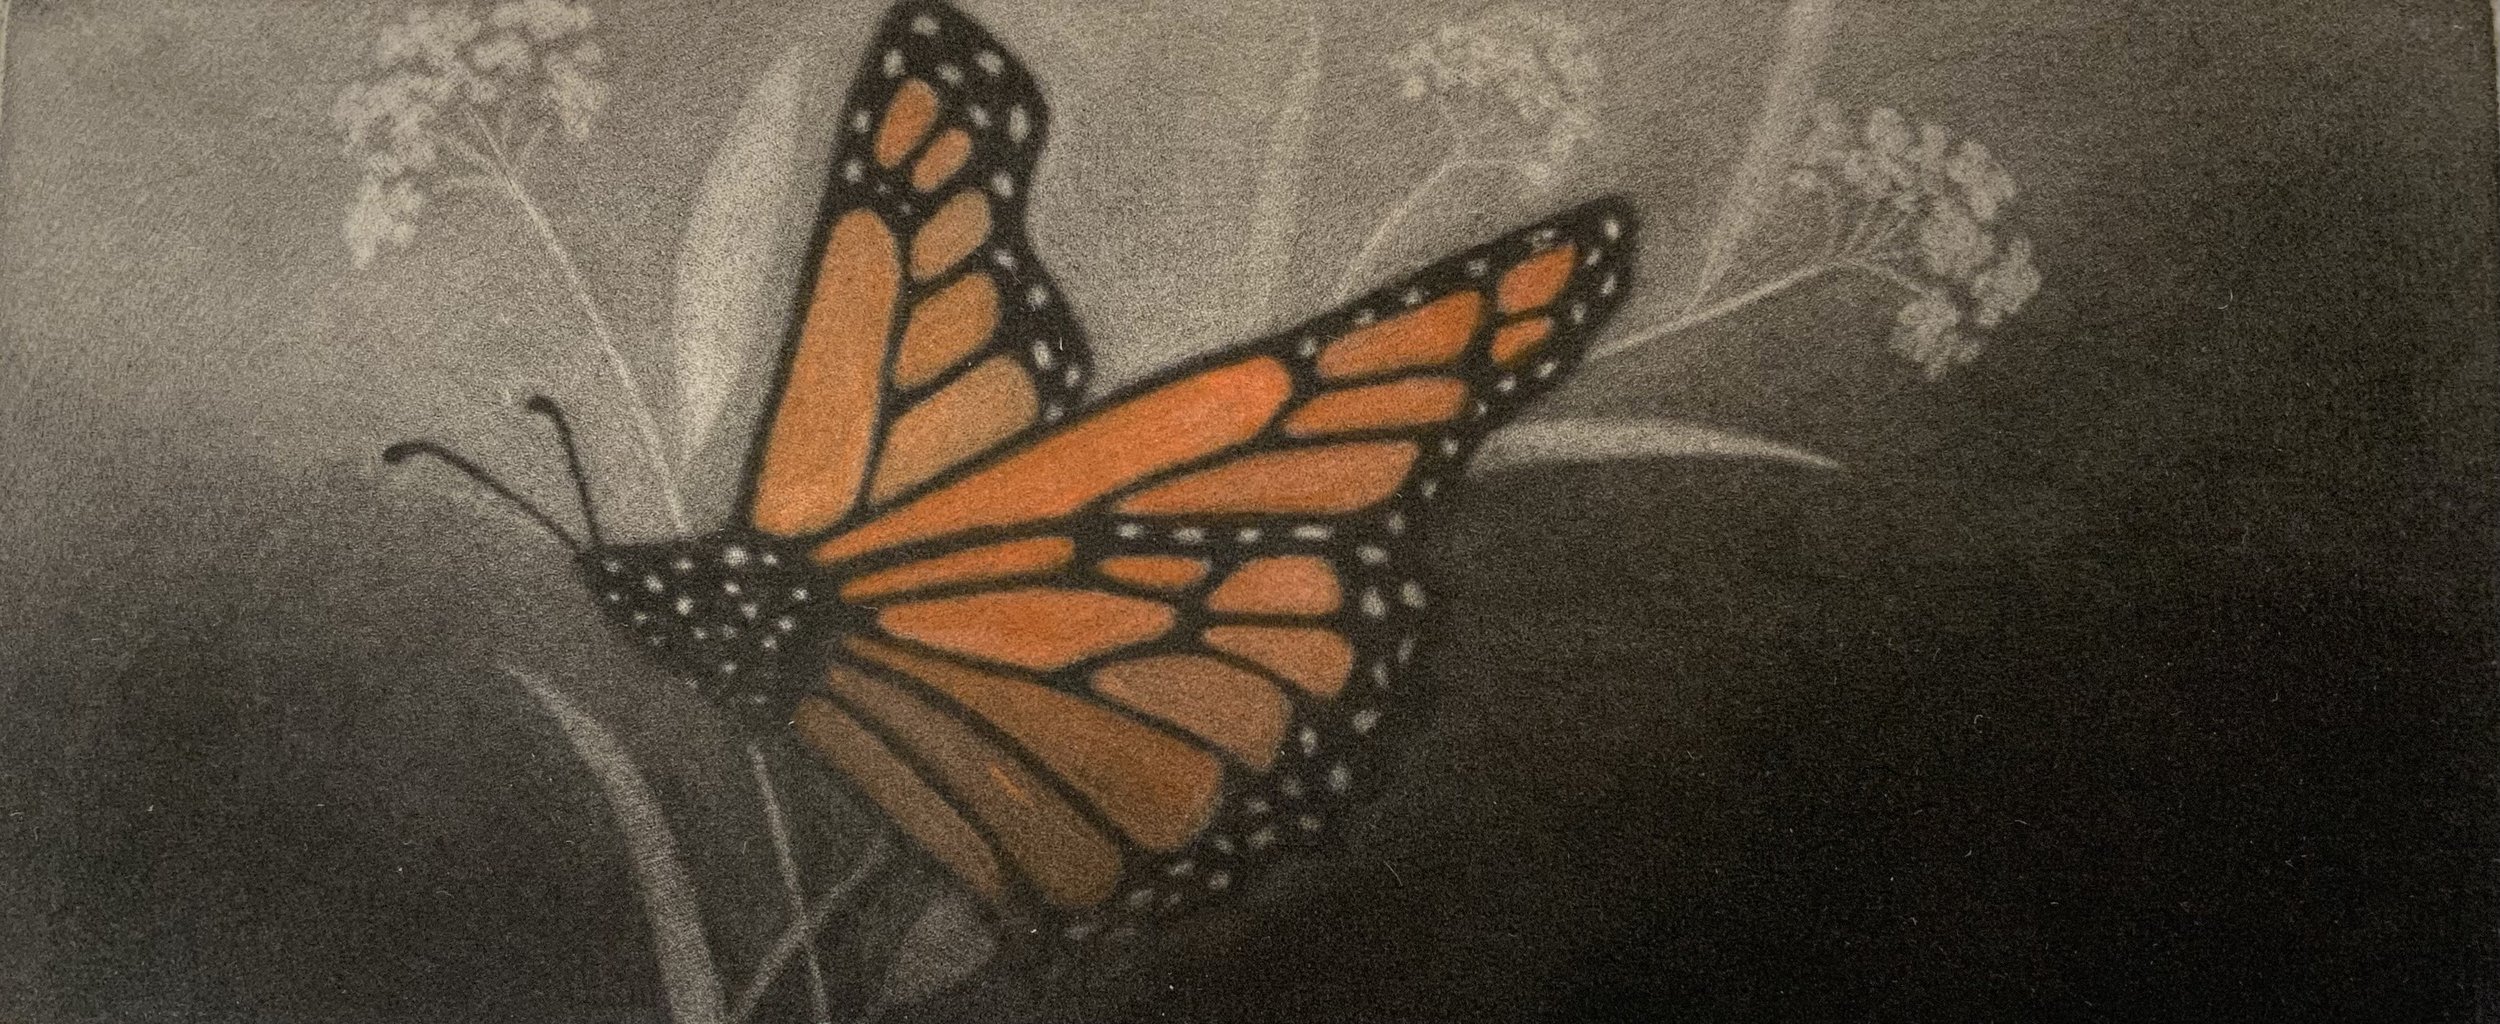 Vanishing X: Monarch Butterfly, 3" x 11", hand-colored mezzotint